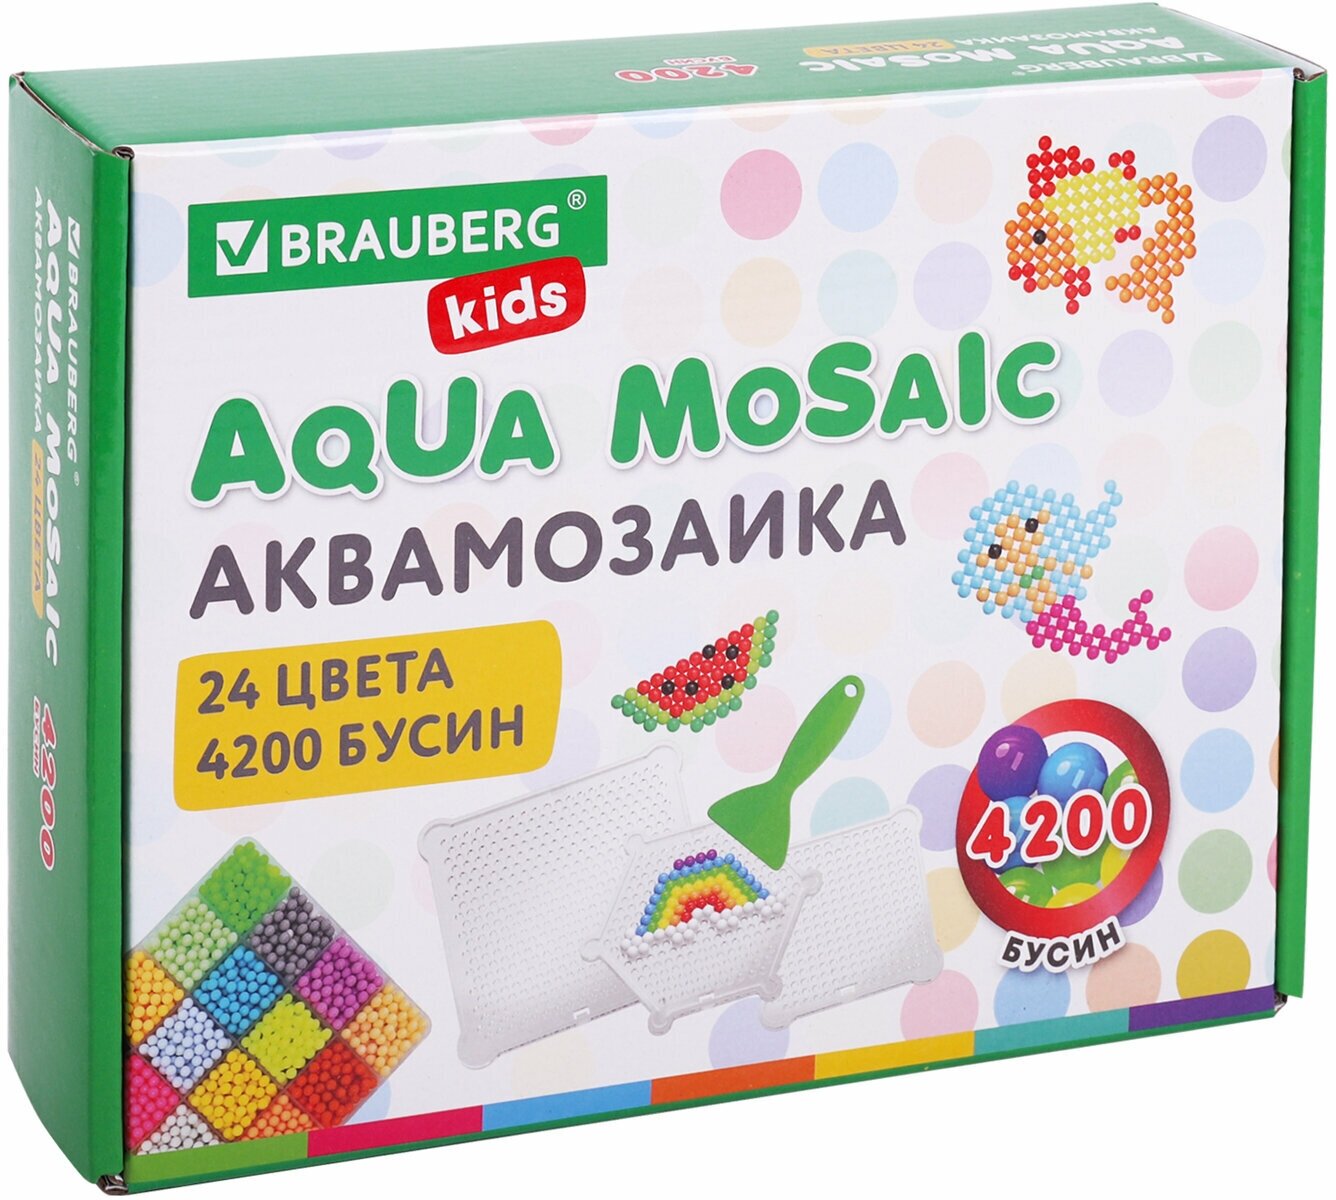 Аквамозаика 24 цвета 4200 бусин, с трафаретами, инструментами и аксессуарами, BRAUBERG KIDS, 664916 В комплекте: 1шт.